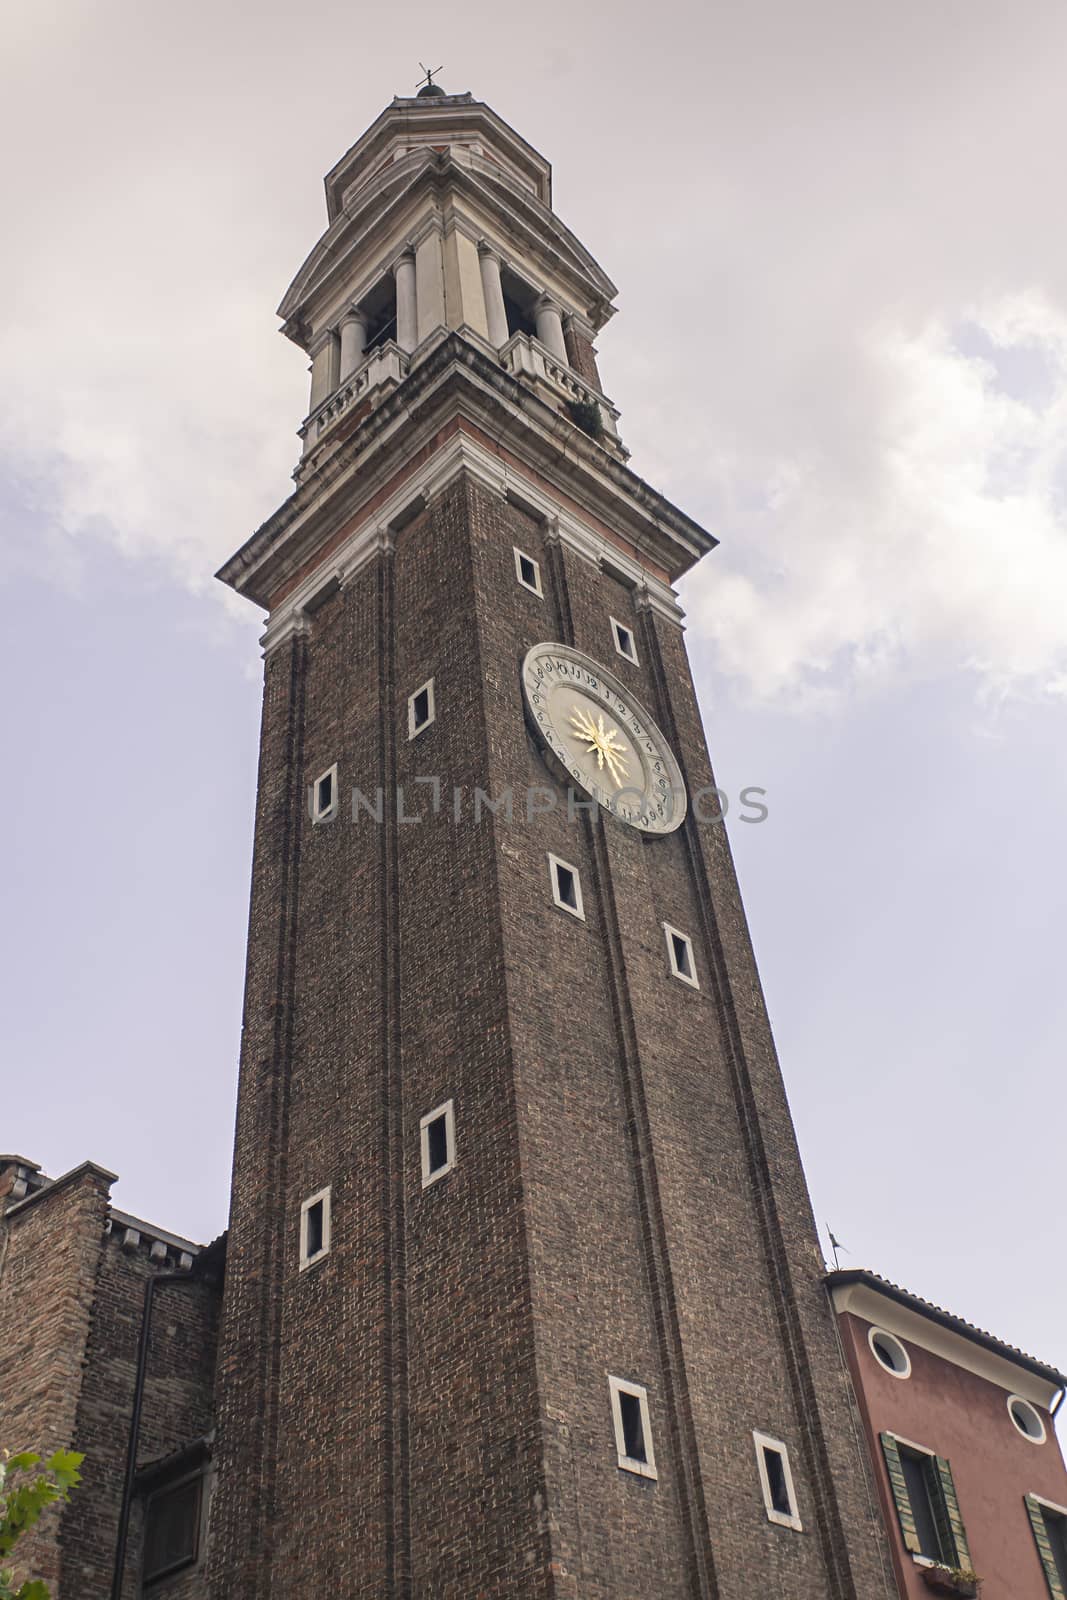 Santi Apostoli bell tower in Venice by pippocarlot